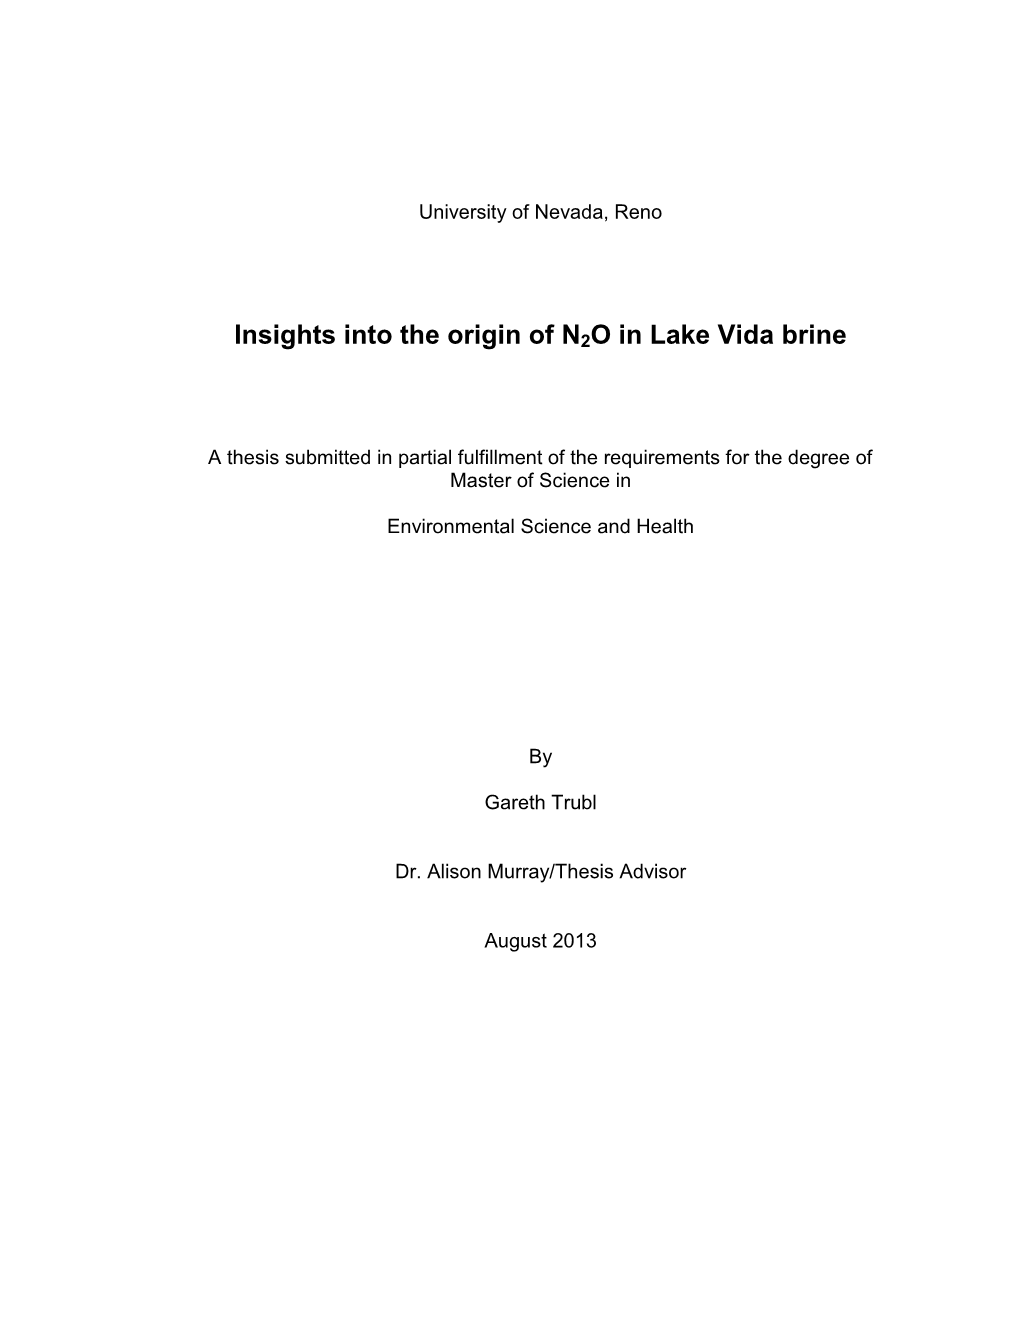 Insights Into the Origin of N2O in Lake Vida Brine